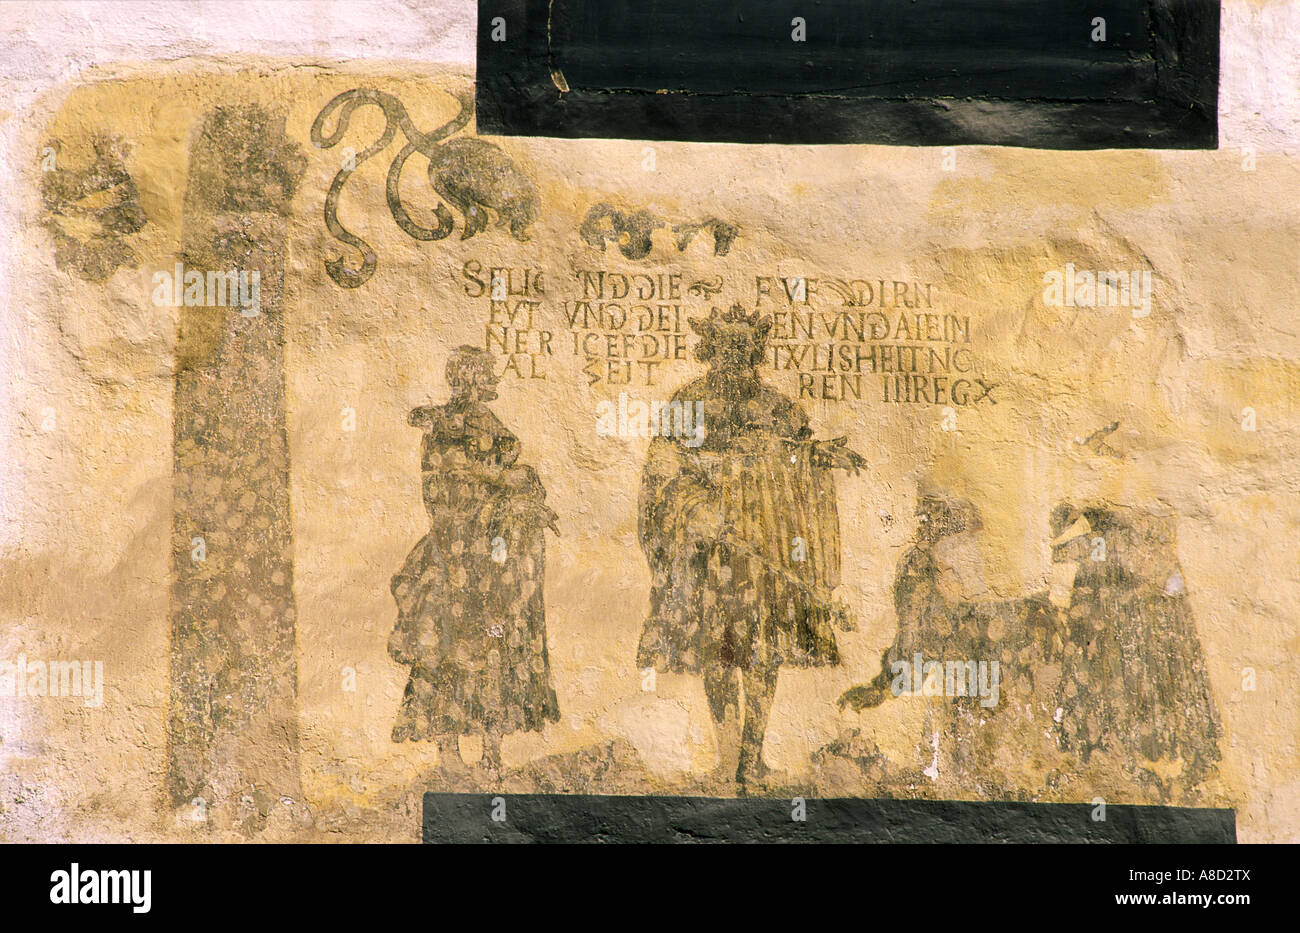 Banska Stiavnica, Slovakia Slovak Republic. Mediaeval mural paintings on building walls in Holy Trinity Square Stock Photo